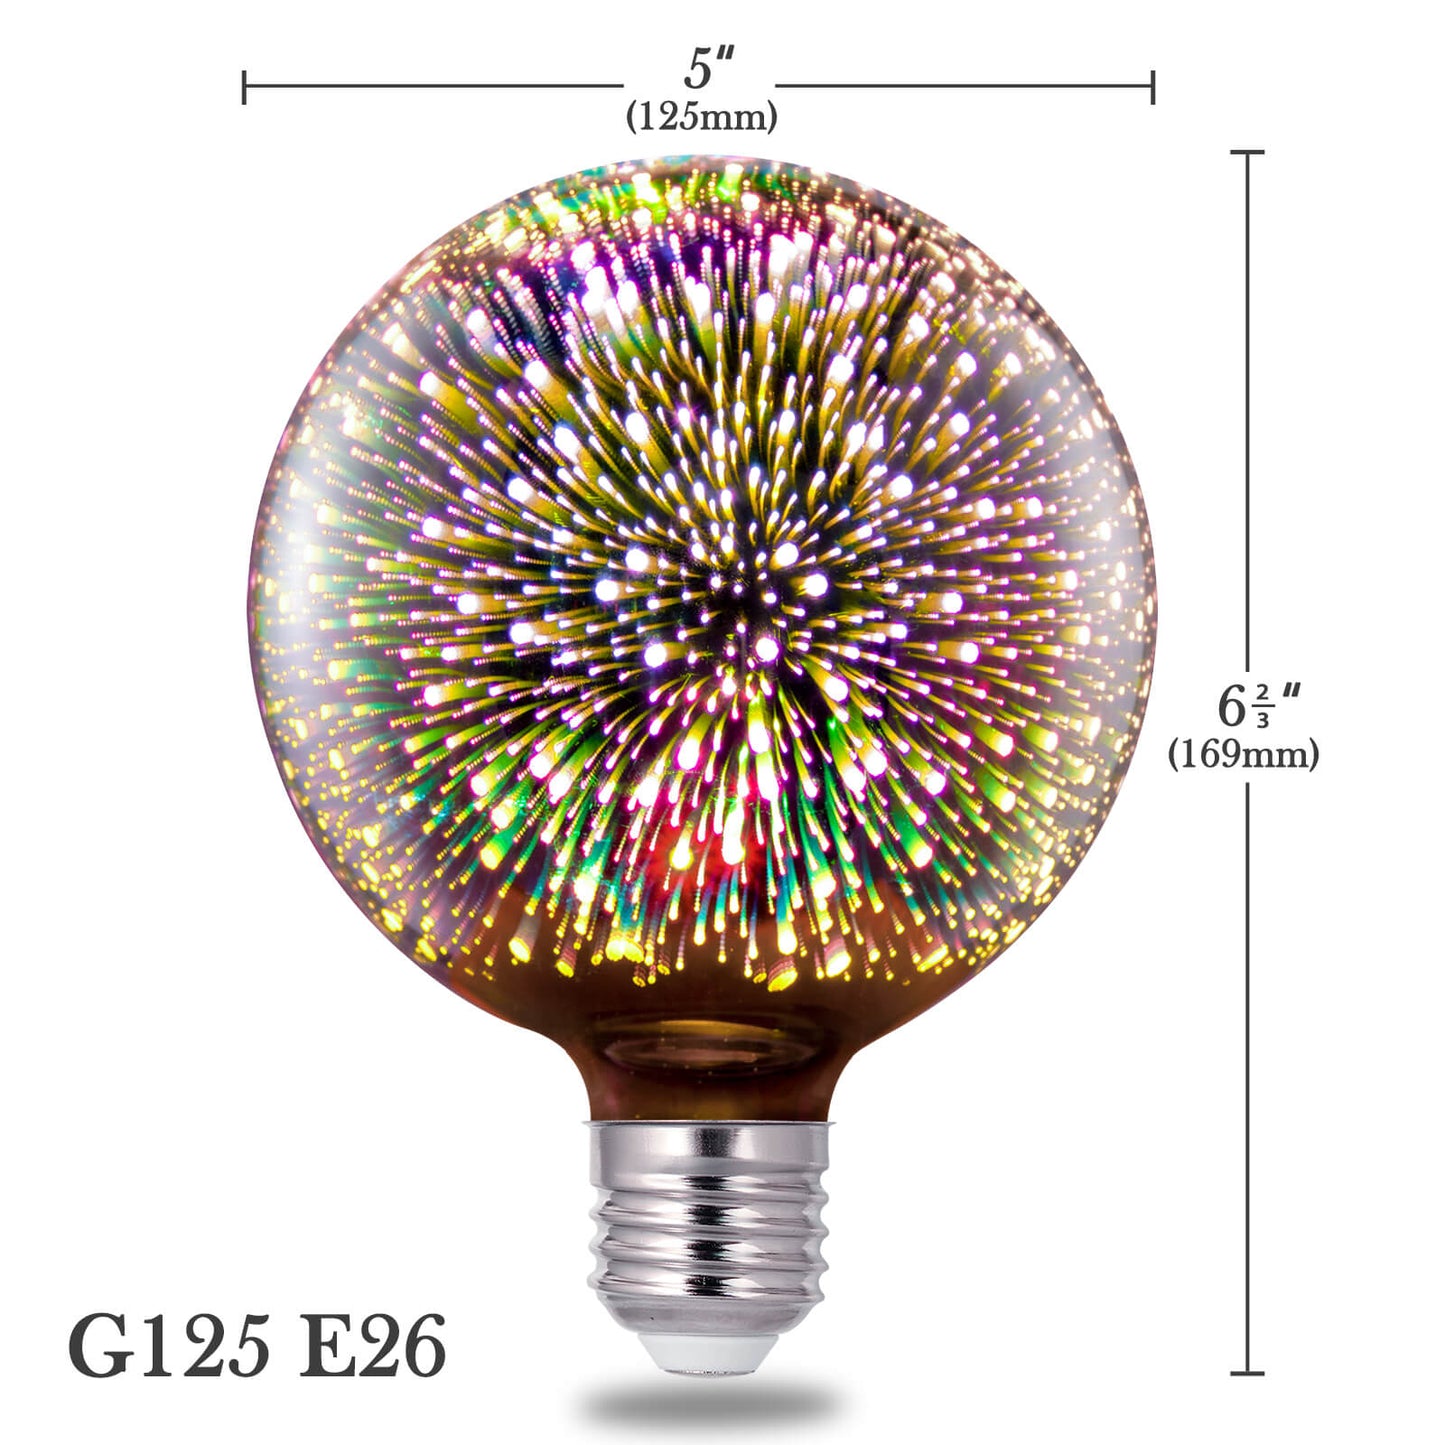 Porseme 3D Fireworks Decorative Light Bulb, E26 Base, 4W, AC100-240V, Glass Bulbs with Soft Warm Light, Shiny Decor for Home, Bedroom, Party (Included 1 G125 Bulb)